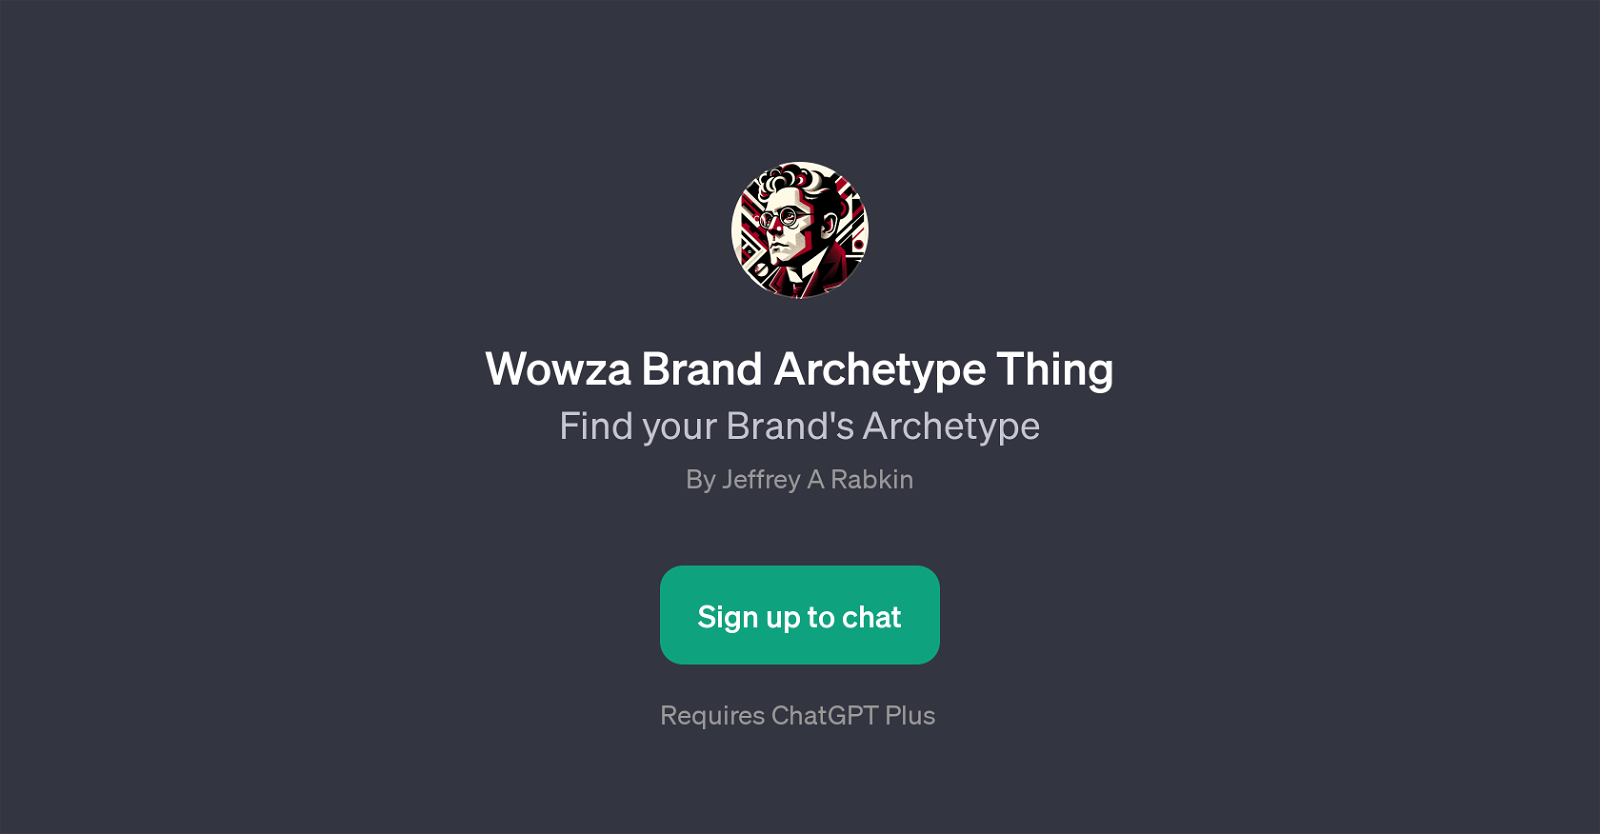 Wowza Brand Archetype Thing website